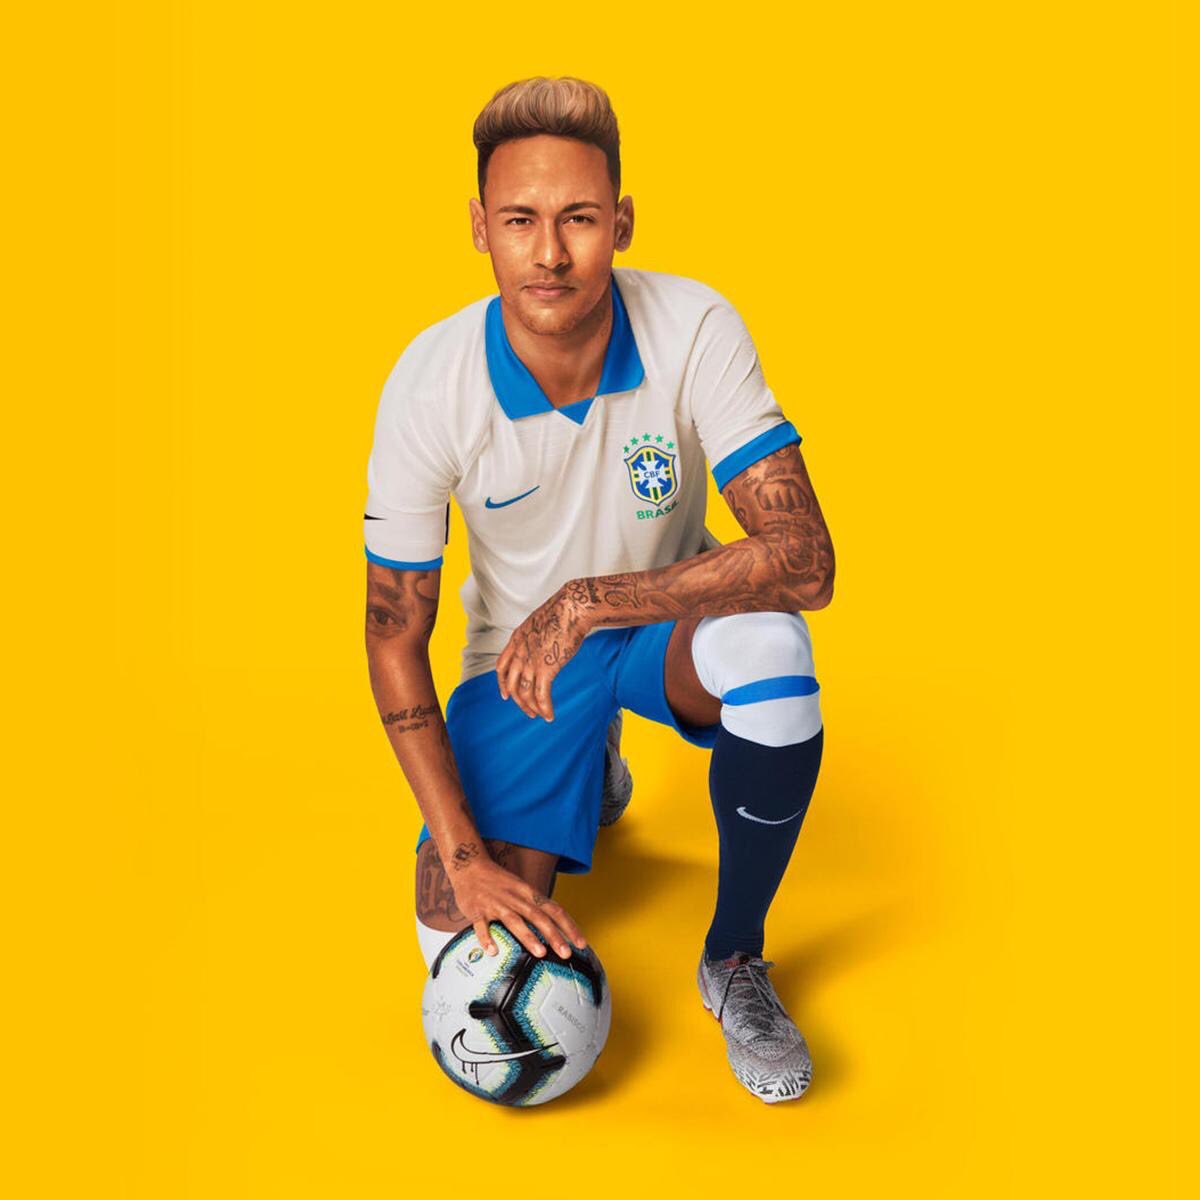 Retro Football Kit from Brazil National Team, 2019 Copa America.